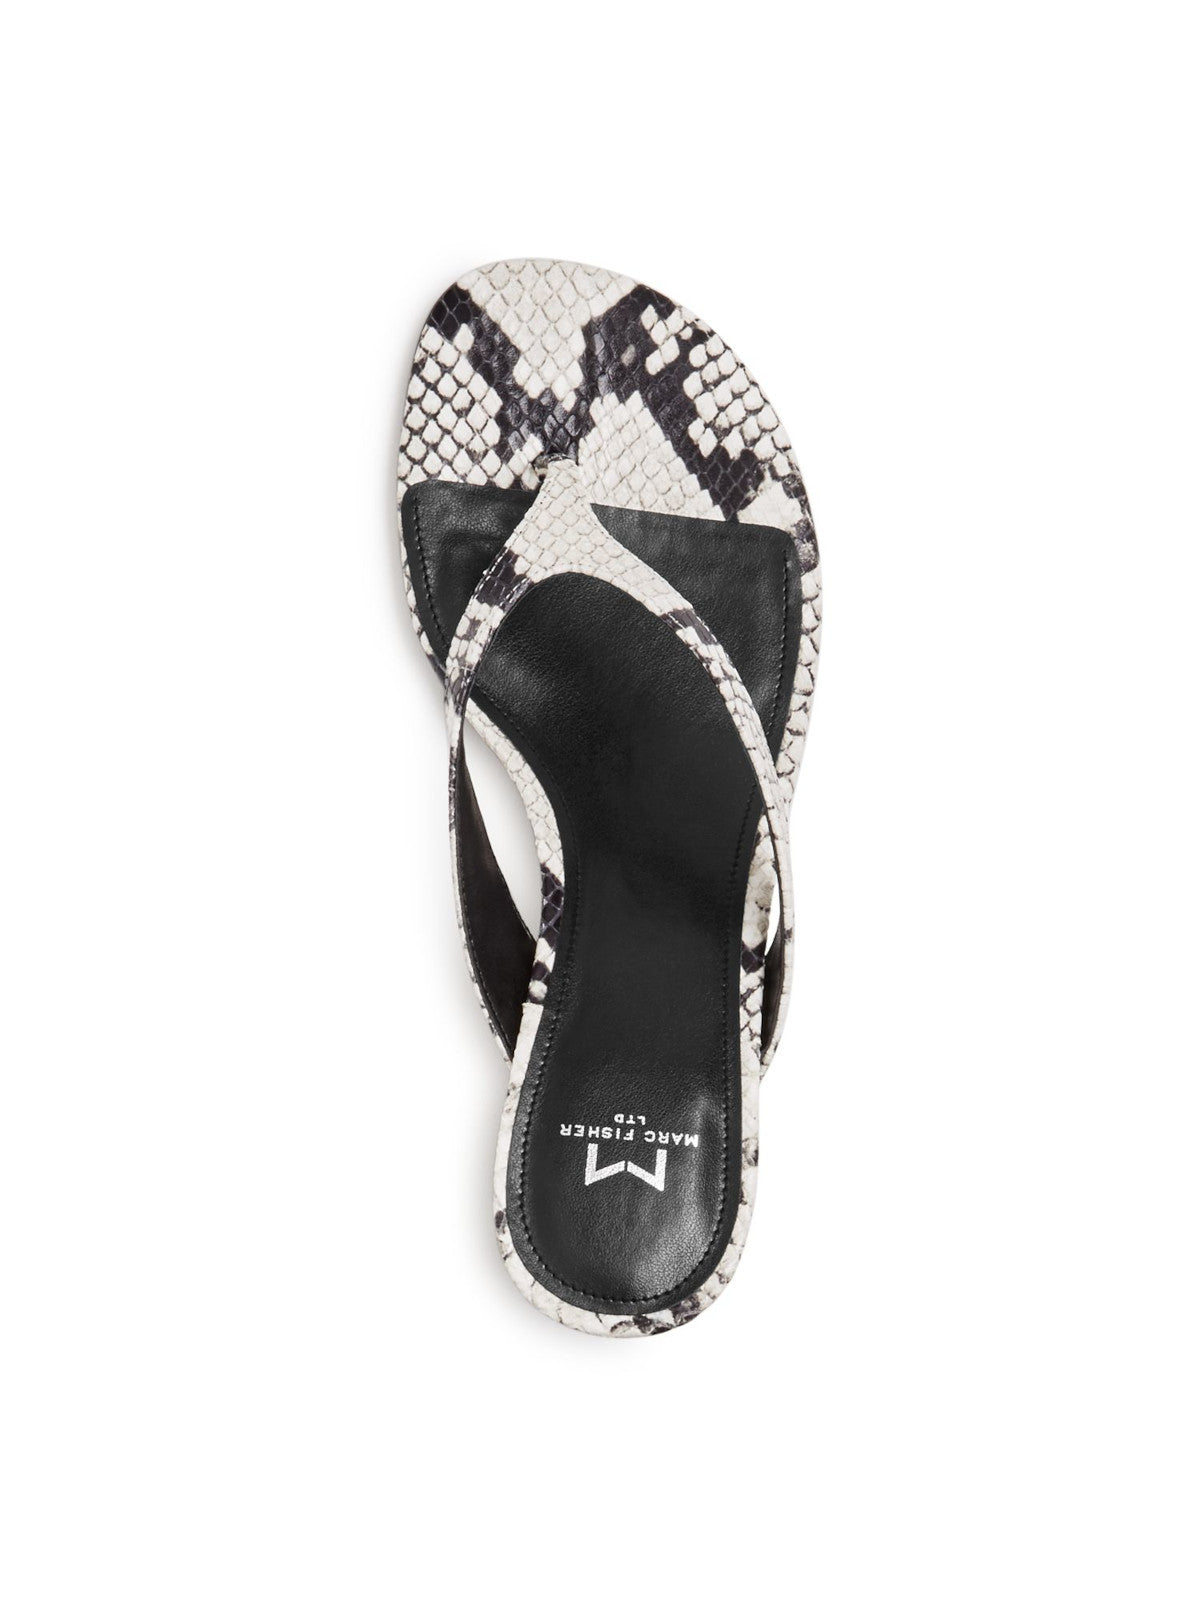 MARC FISHER Womens Gray Croc Comfort Dahila Round Toe Kitten Heel Slip On Leather Dress Sandals Shoes 9 M